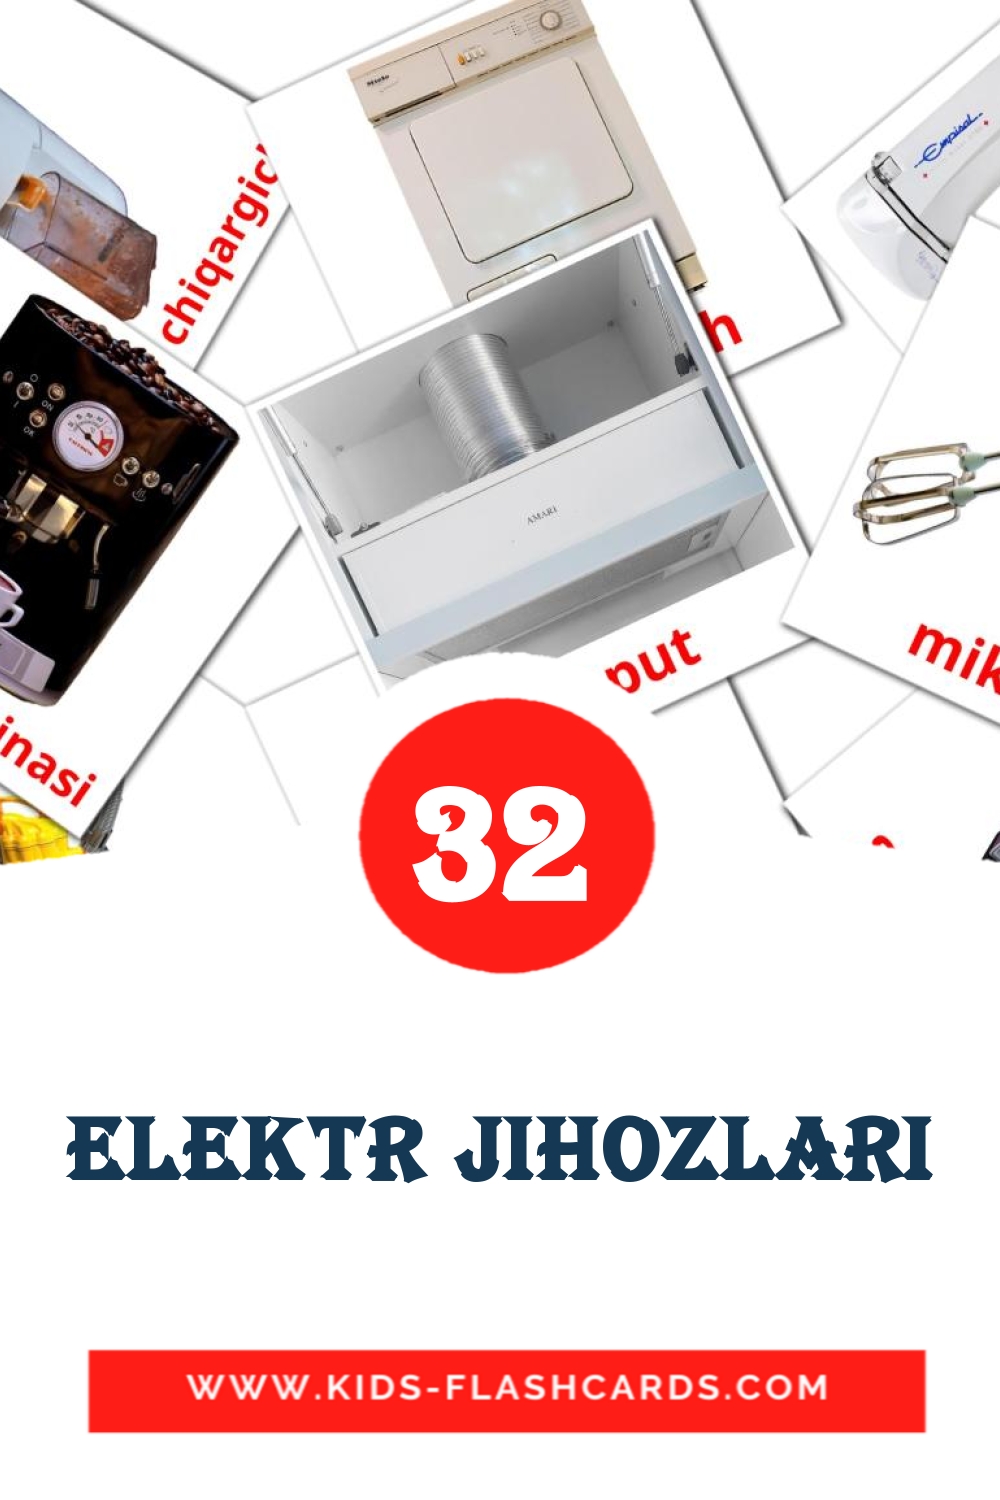 32 carte illustrate di Elektr jihozlari per la scuola materna in uzbek